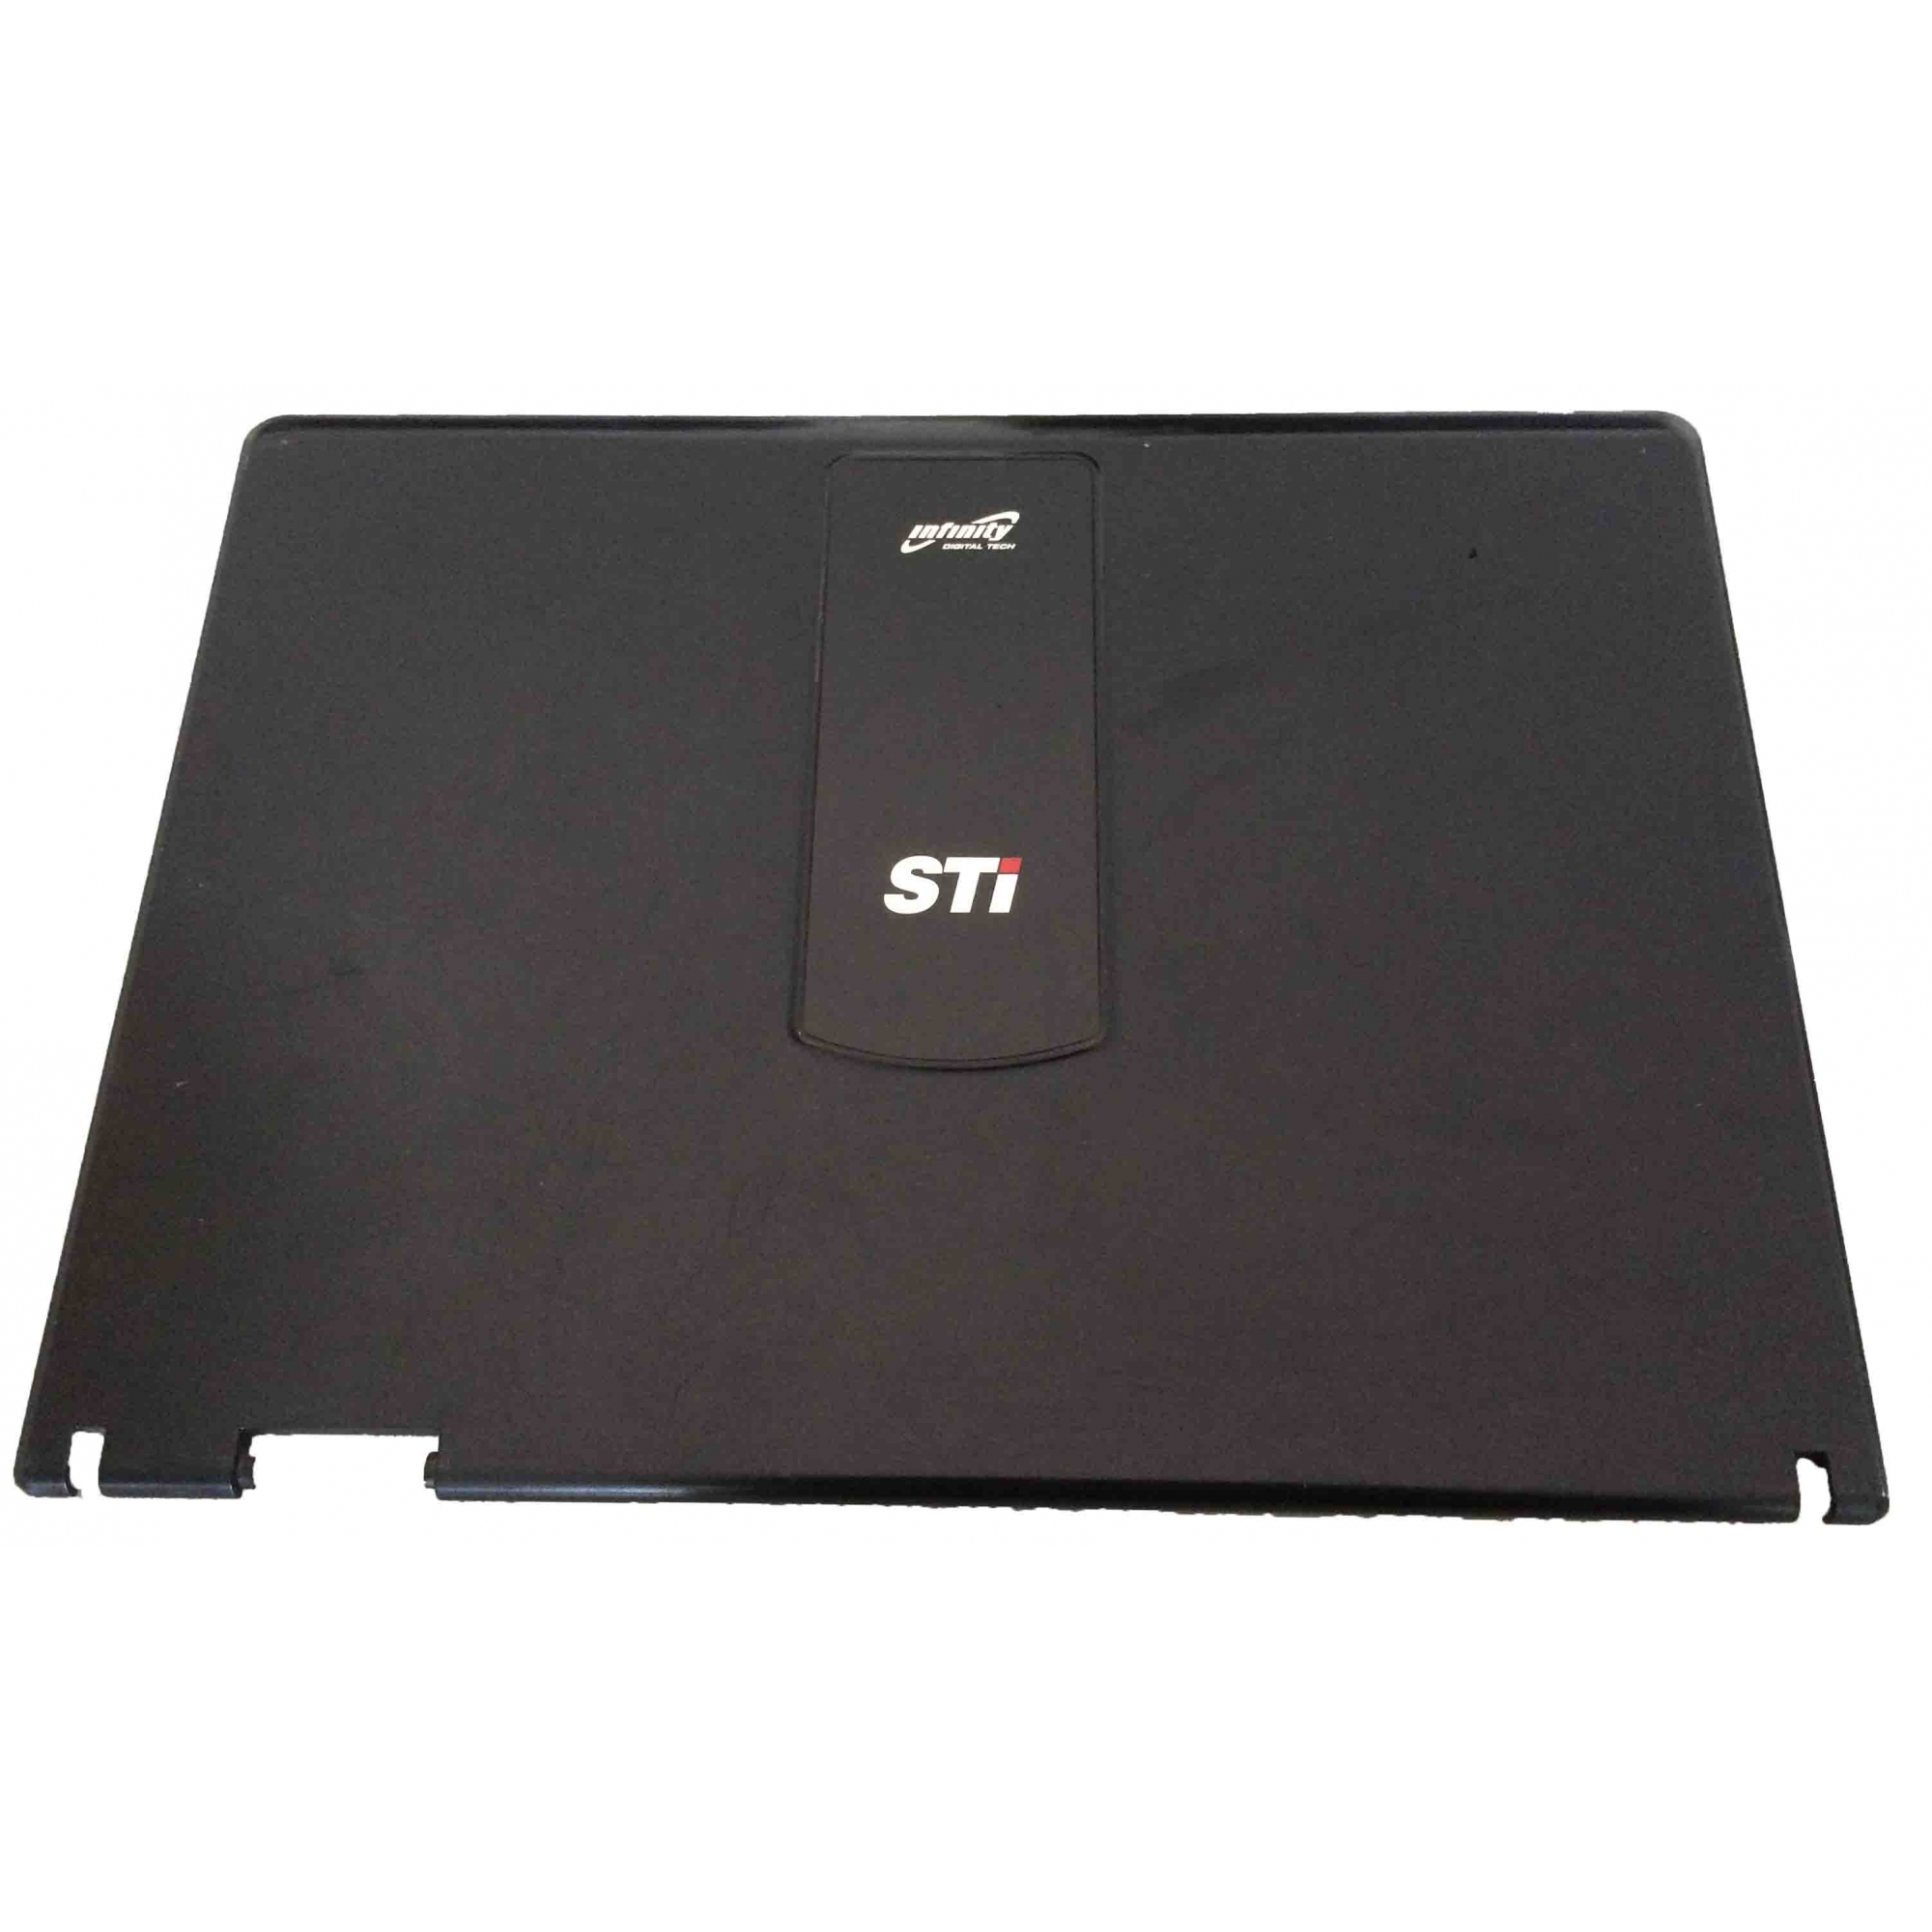 Carcaça Tampa LCD + Antena Wi-Fi + Flat Notebook Sti Infinity Digital Tsa 80-41158-30 - Seminovo